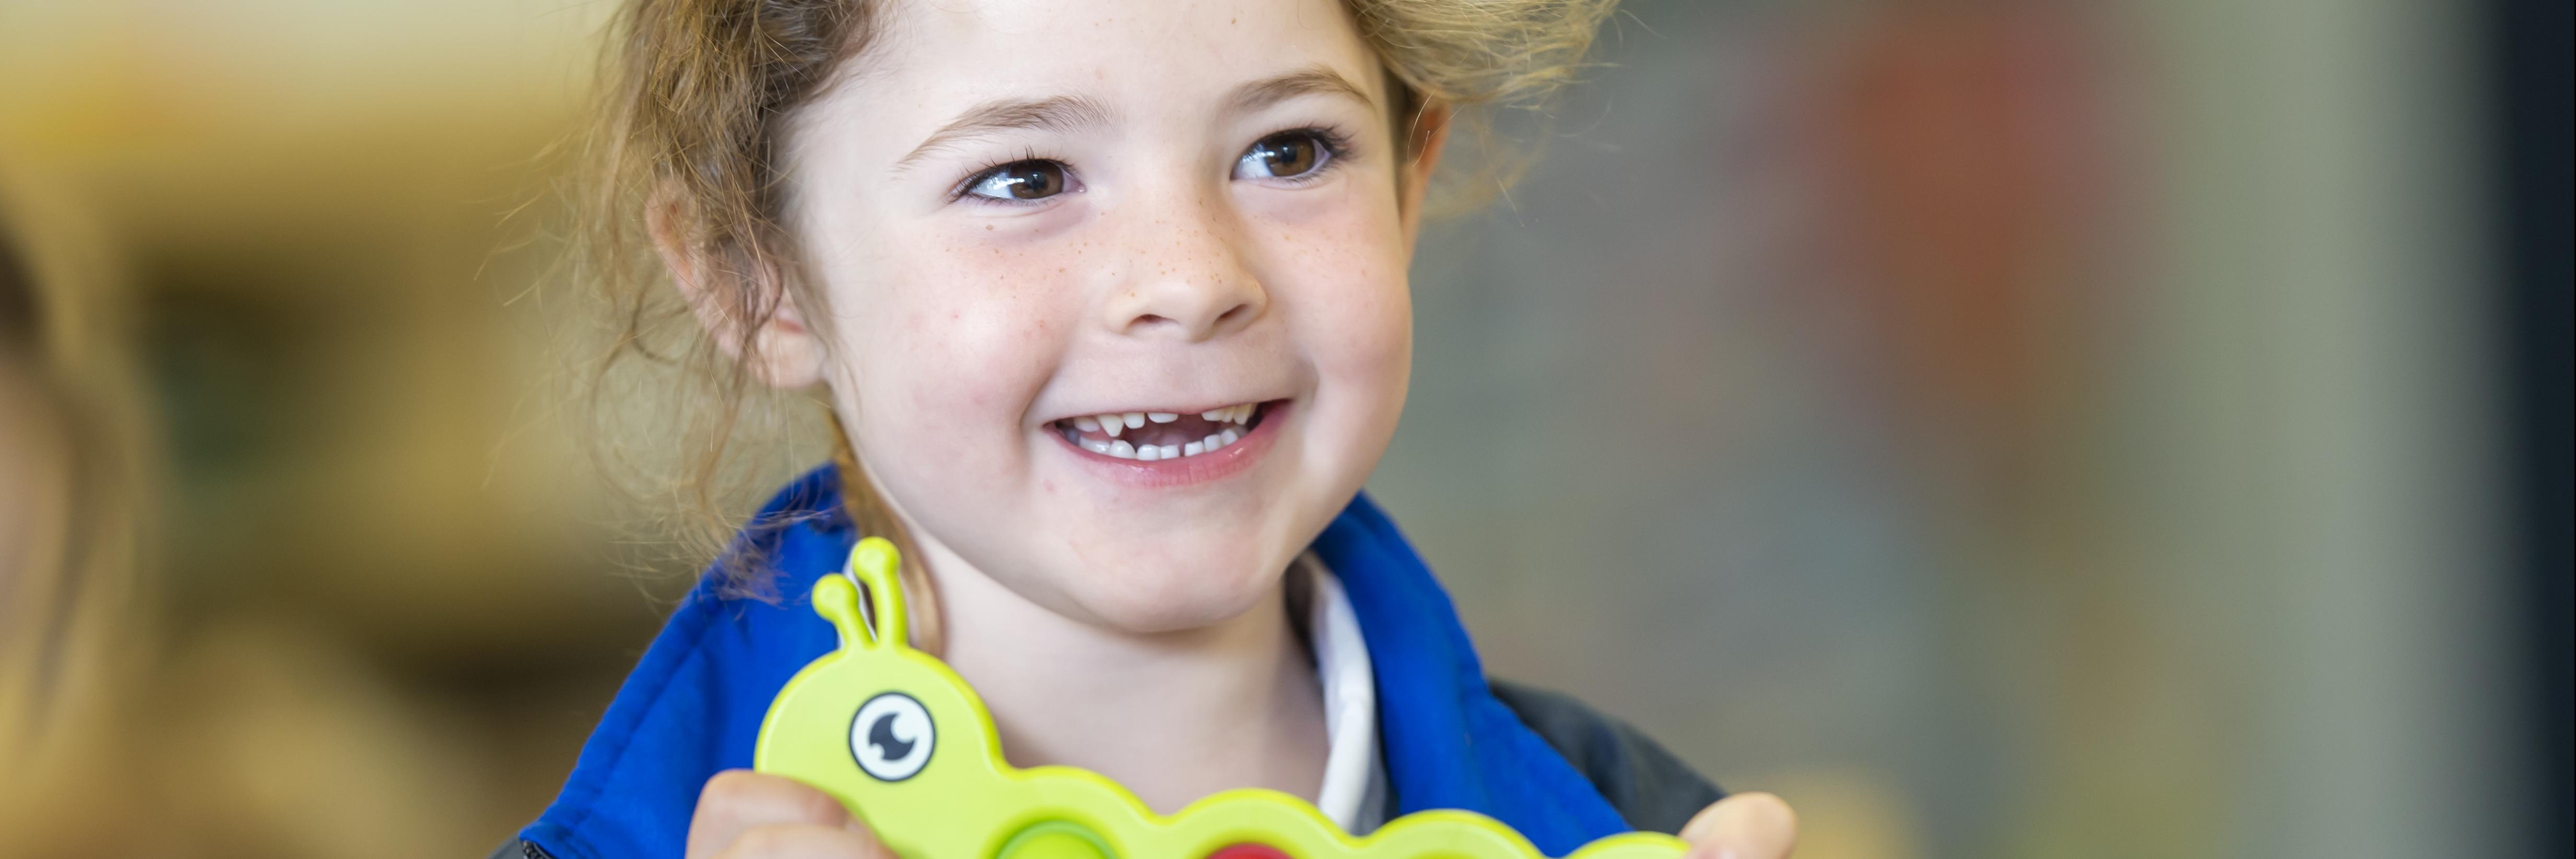 Child smiling holding toy